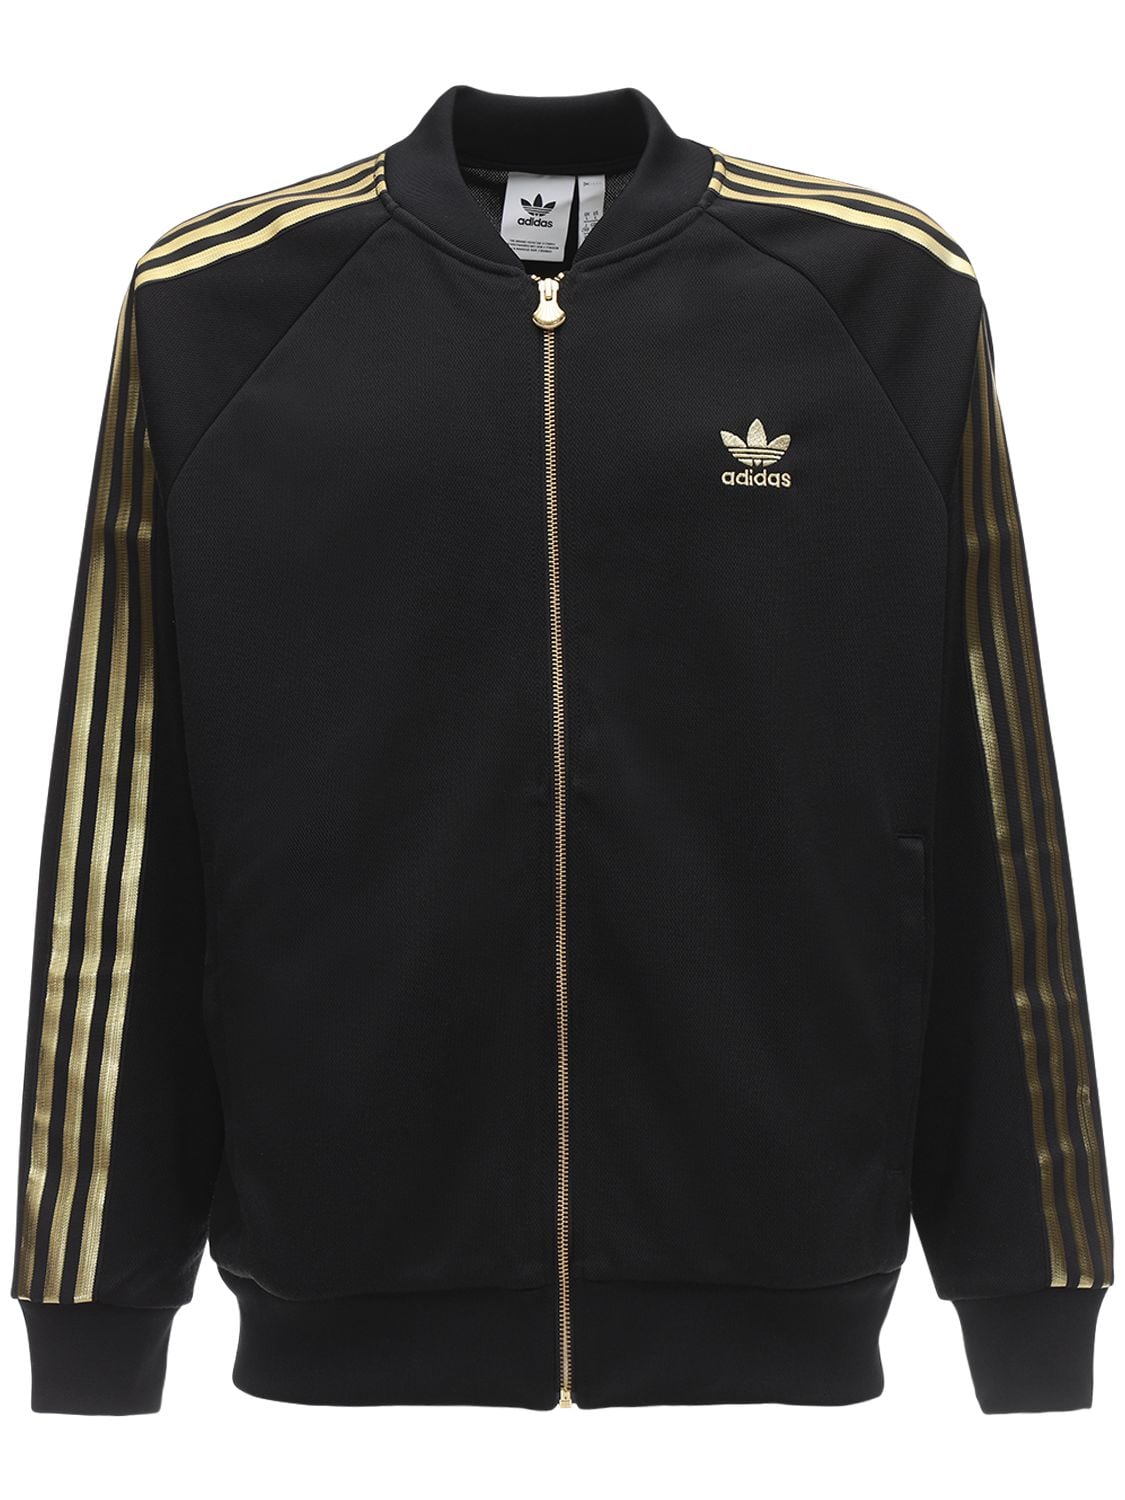 gold stripe adidas jacket